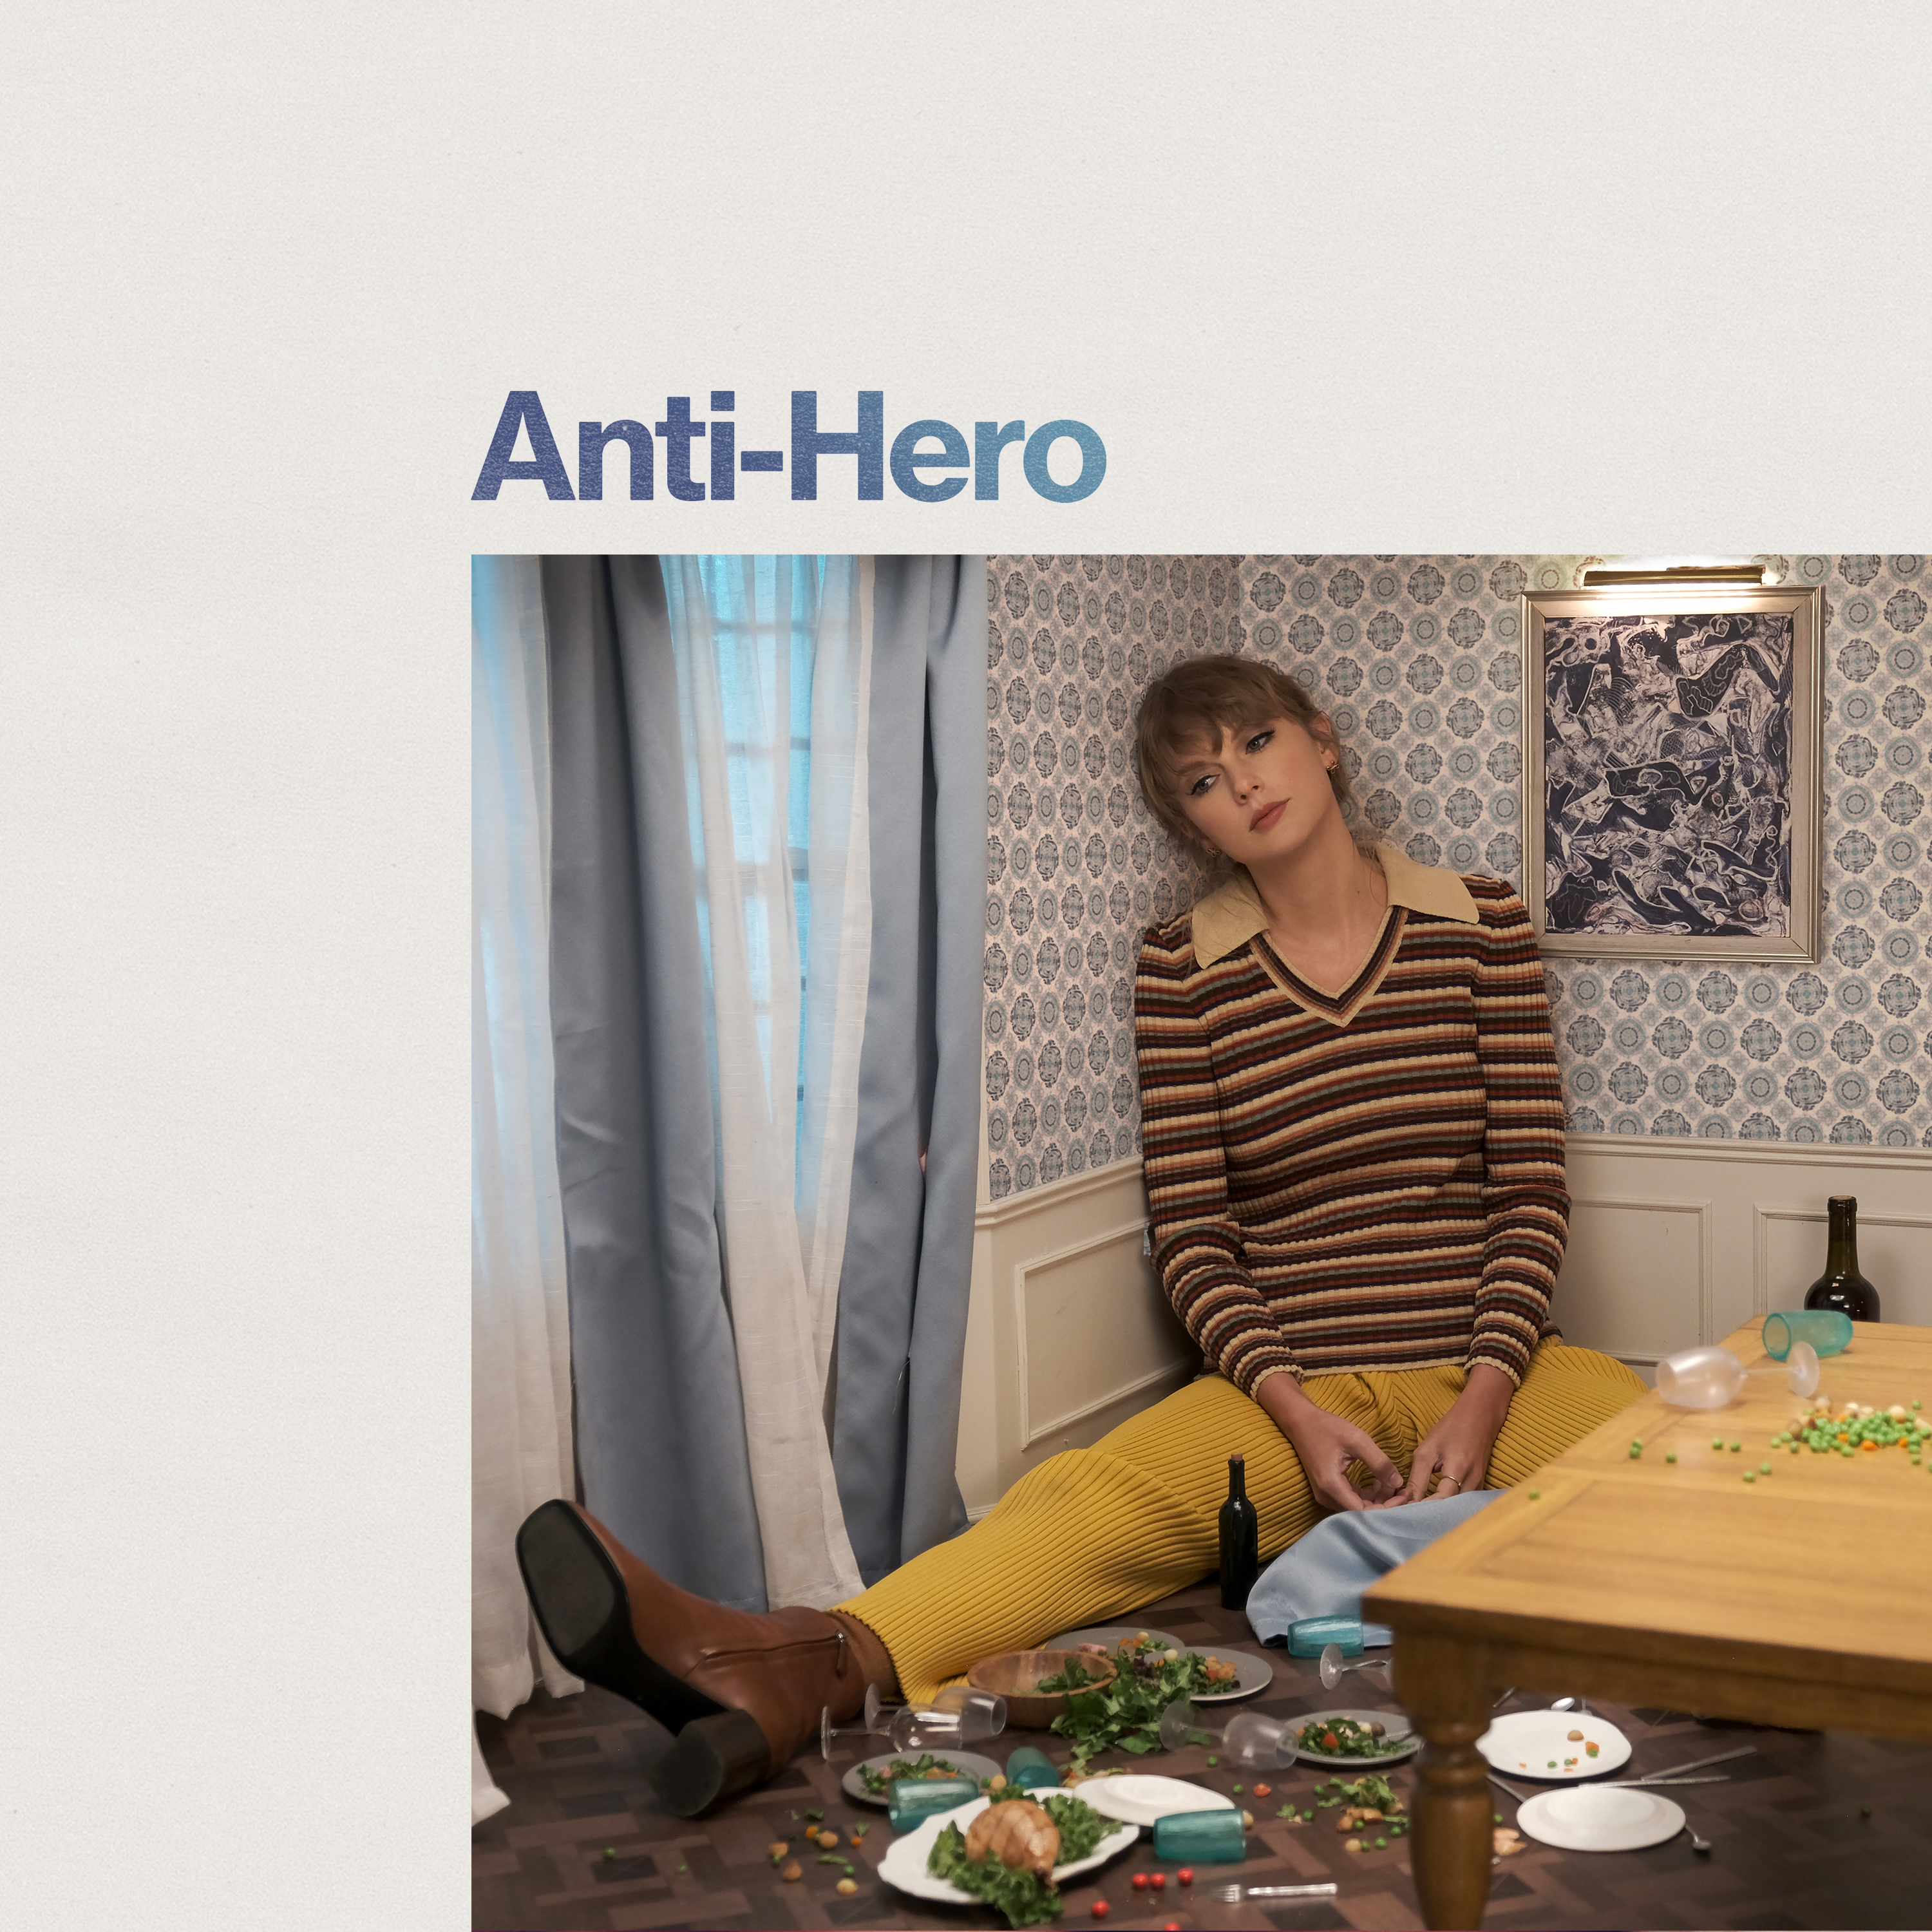 Taylor Swift Anti-Hero cover artwork